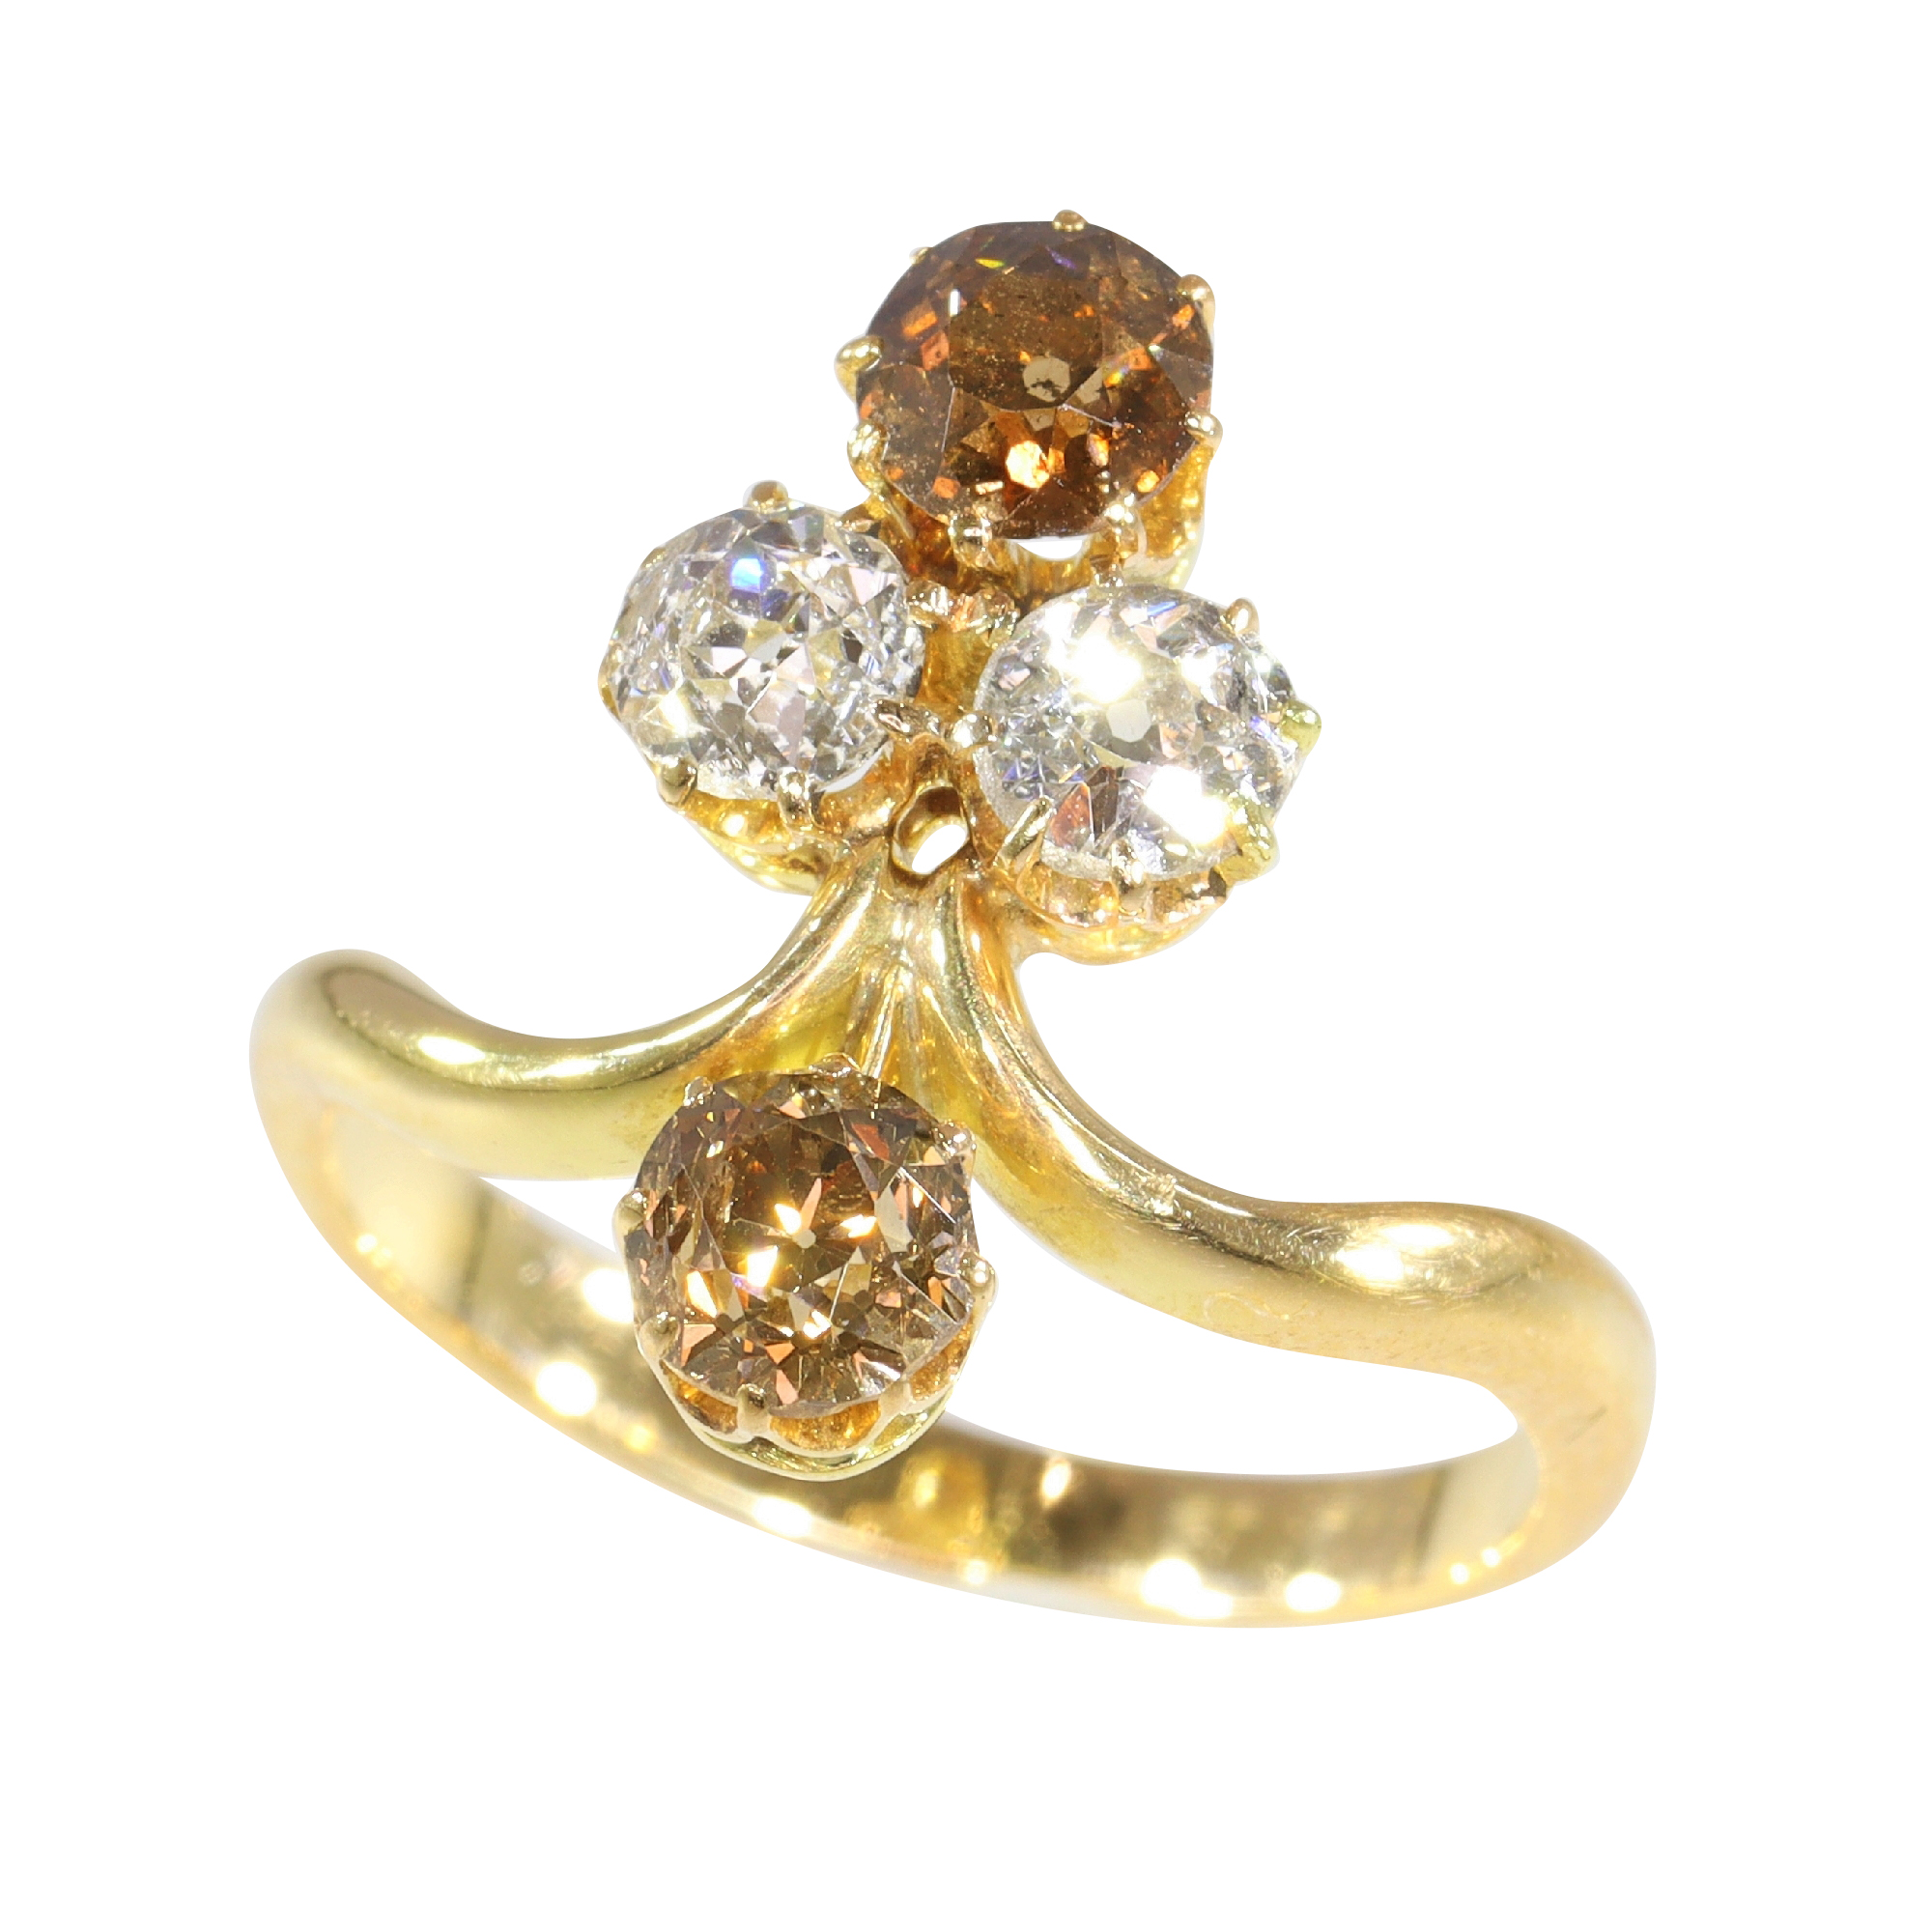 Vintage Victorian Grace: The Aigrette Diamond Ring